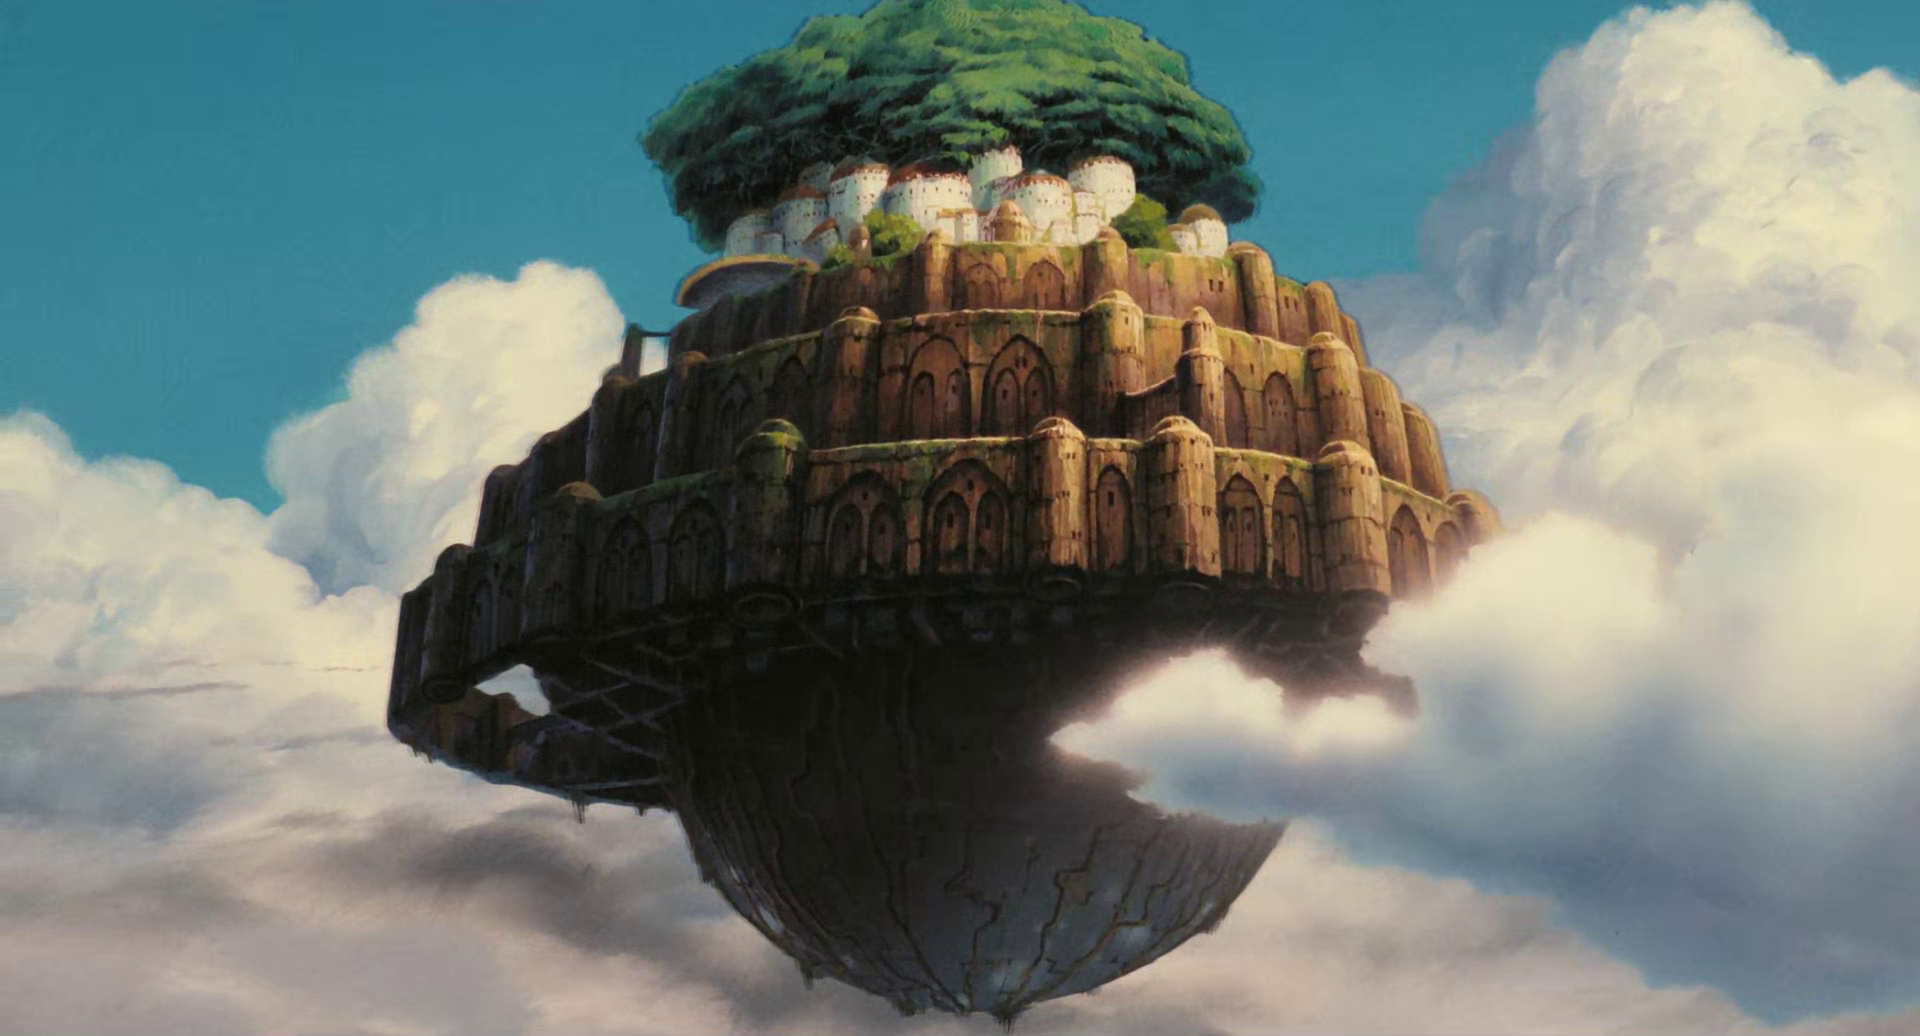 laputa:castle in the sky